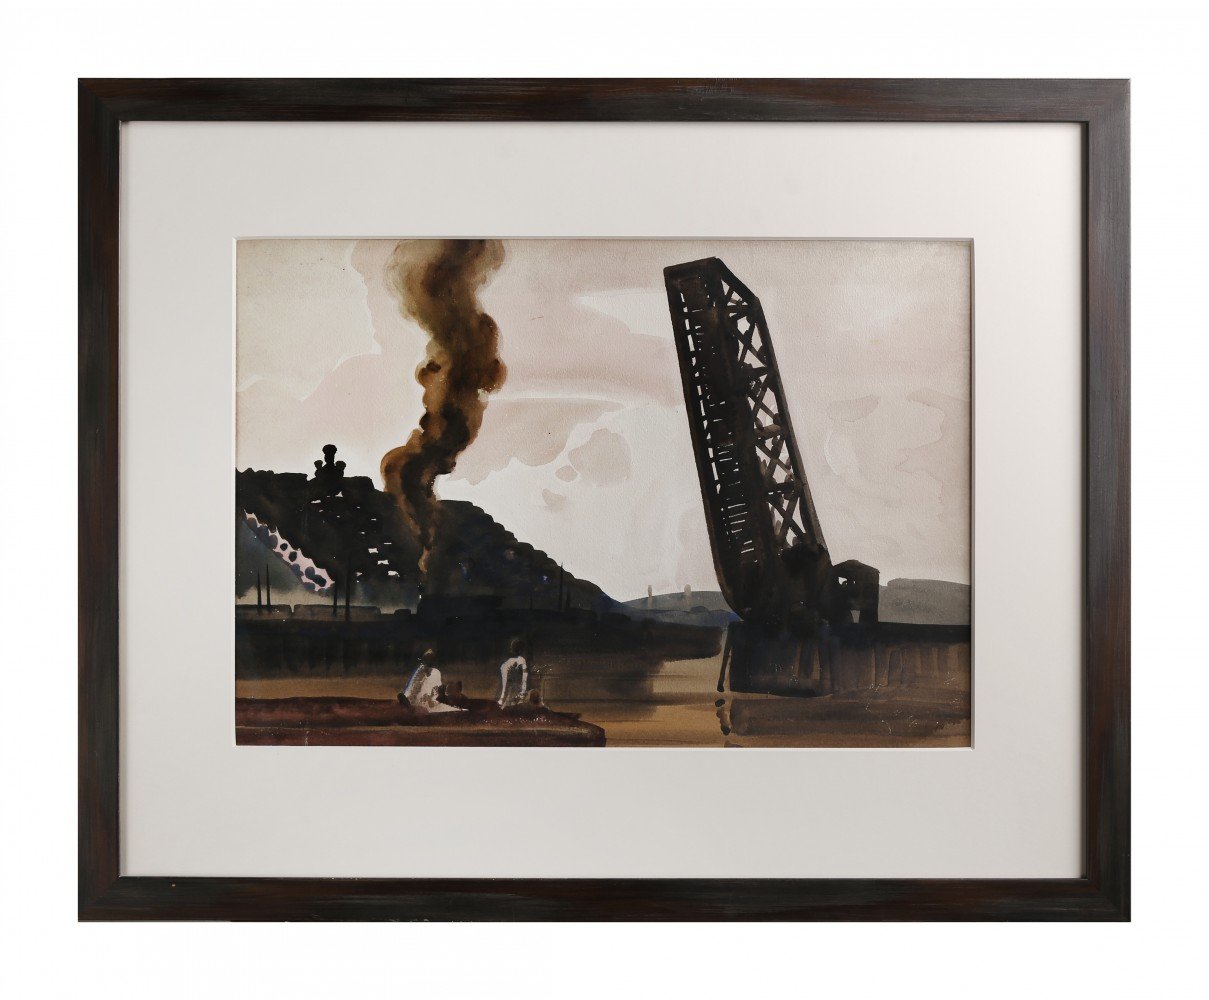 Baltimore & Ohio Railway Bridge 1 across the Cuyahoga River, Cleveland, Ohio by Frank Nelson Wilcox